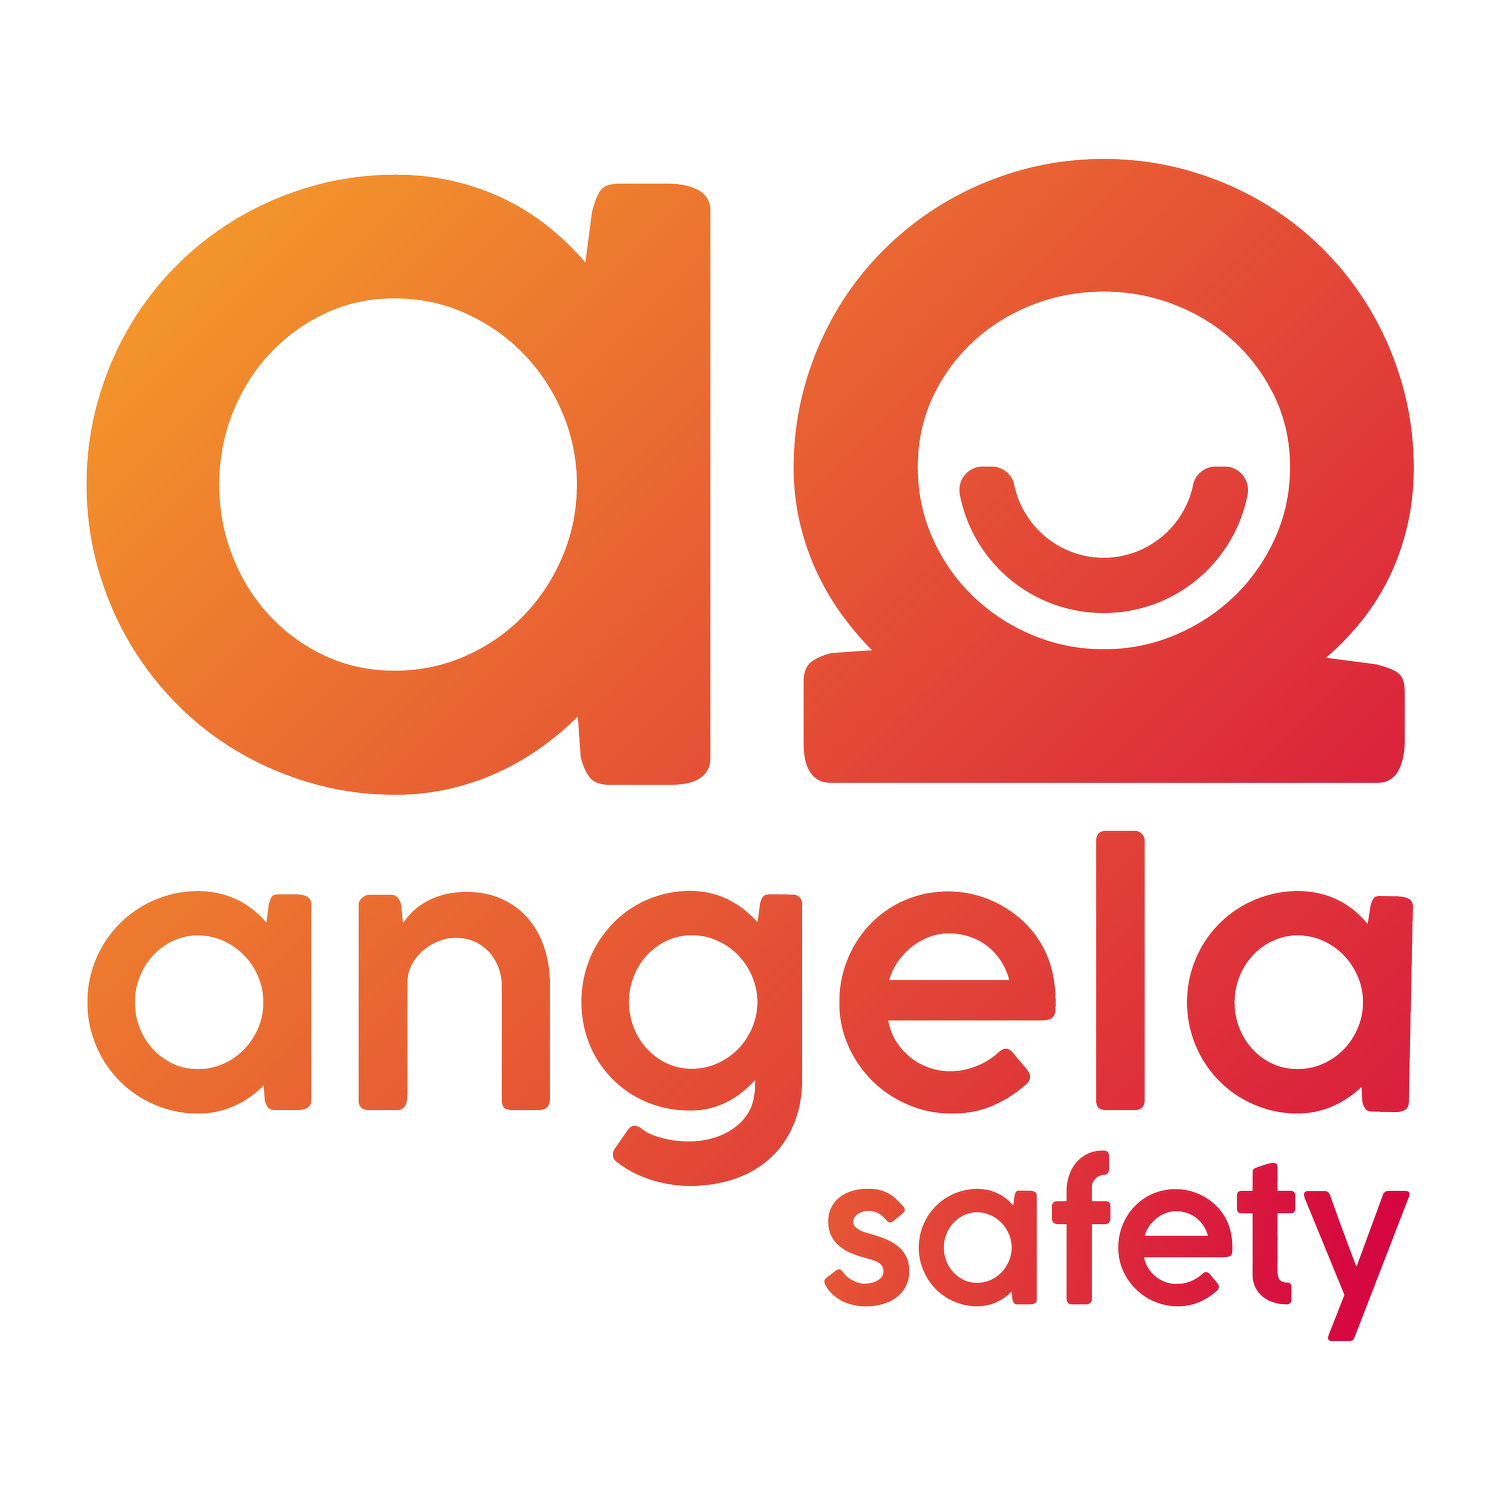 Angela Safety App